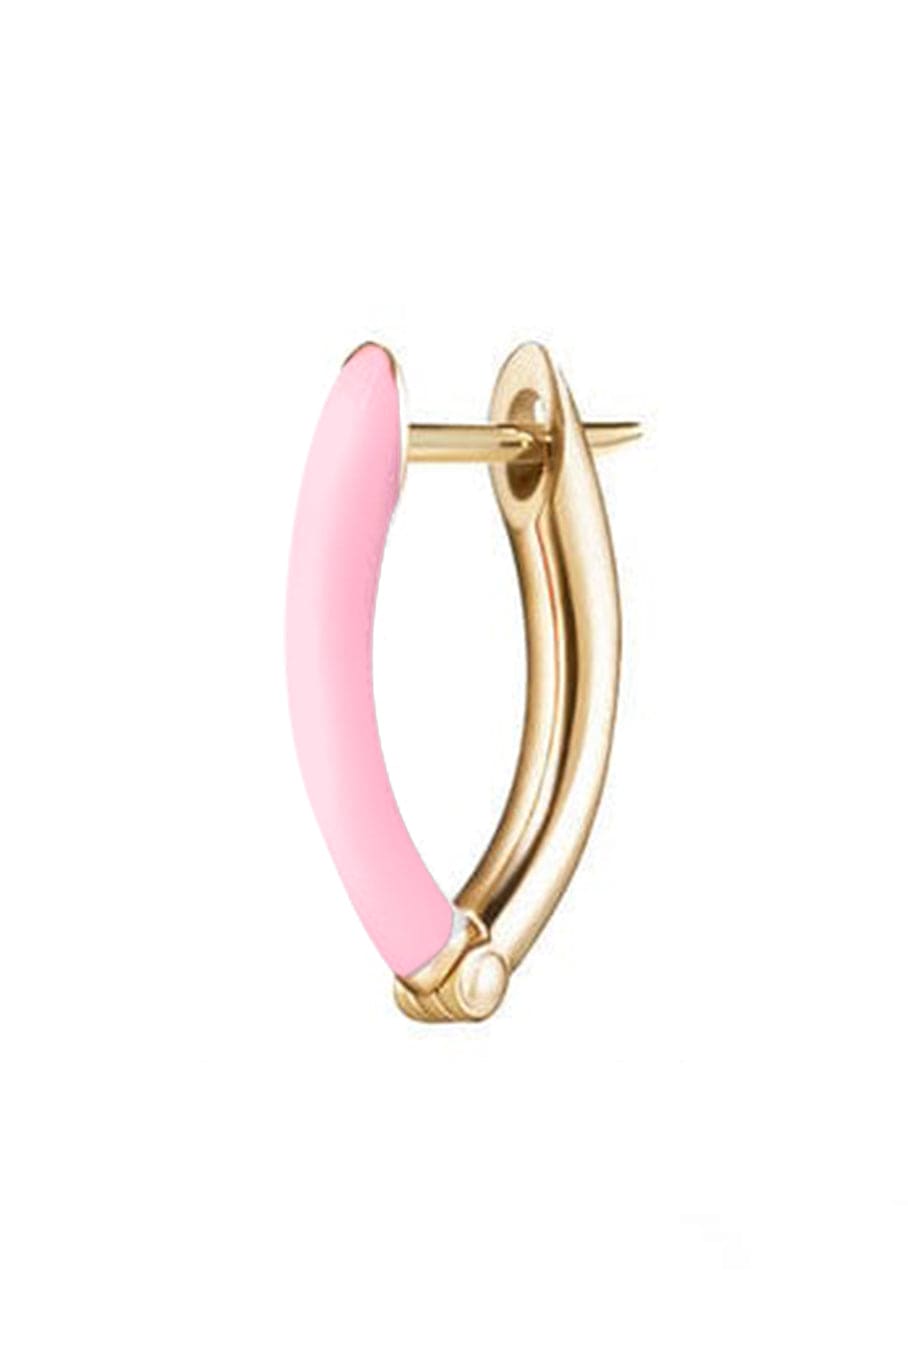 MELISSA KAYE-Marissa Pink Small Cristina Earring-ROSE GOLD